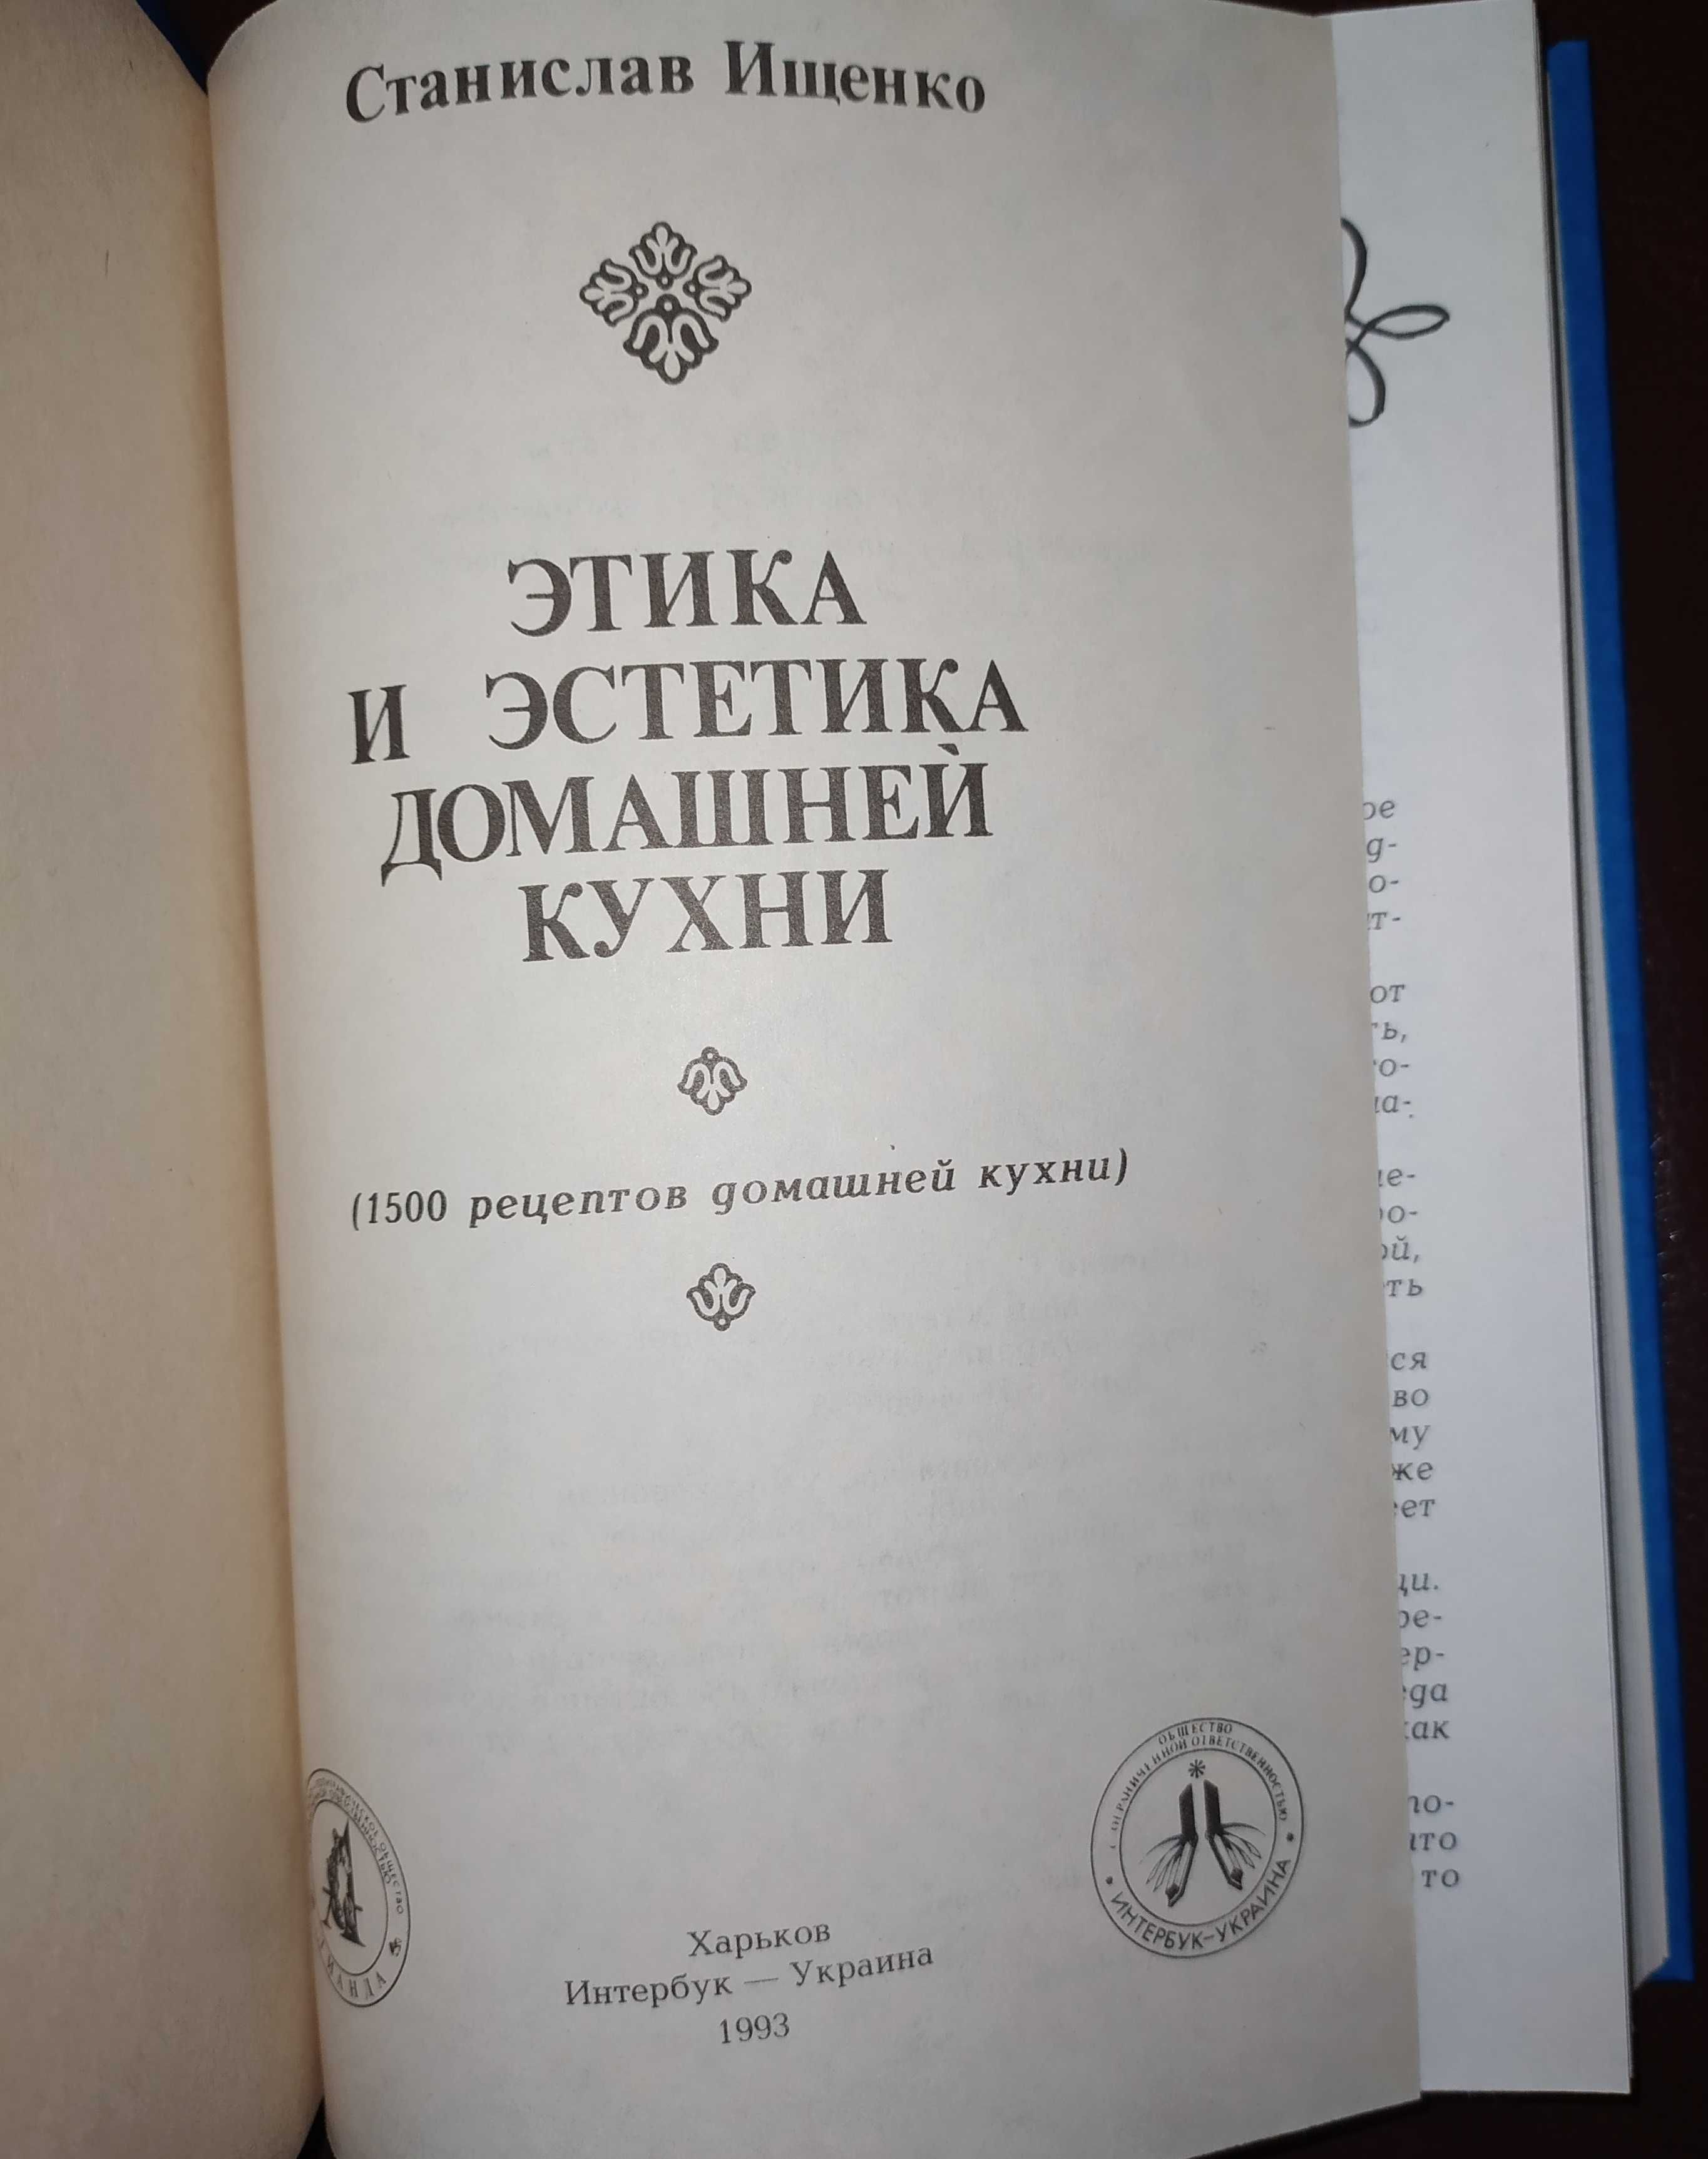 Книги,книга.«Этика и эстетика домашней кухни»С.Ищенко.(1500 рецептов )